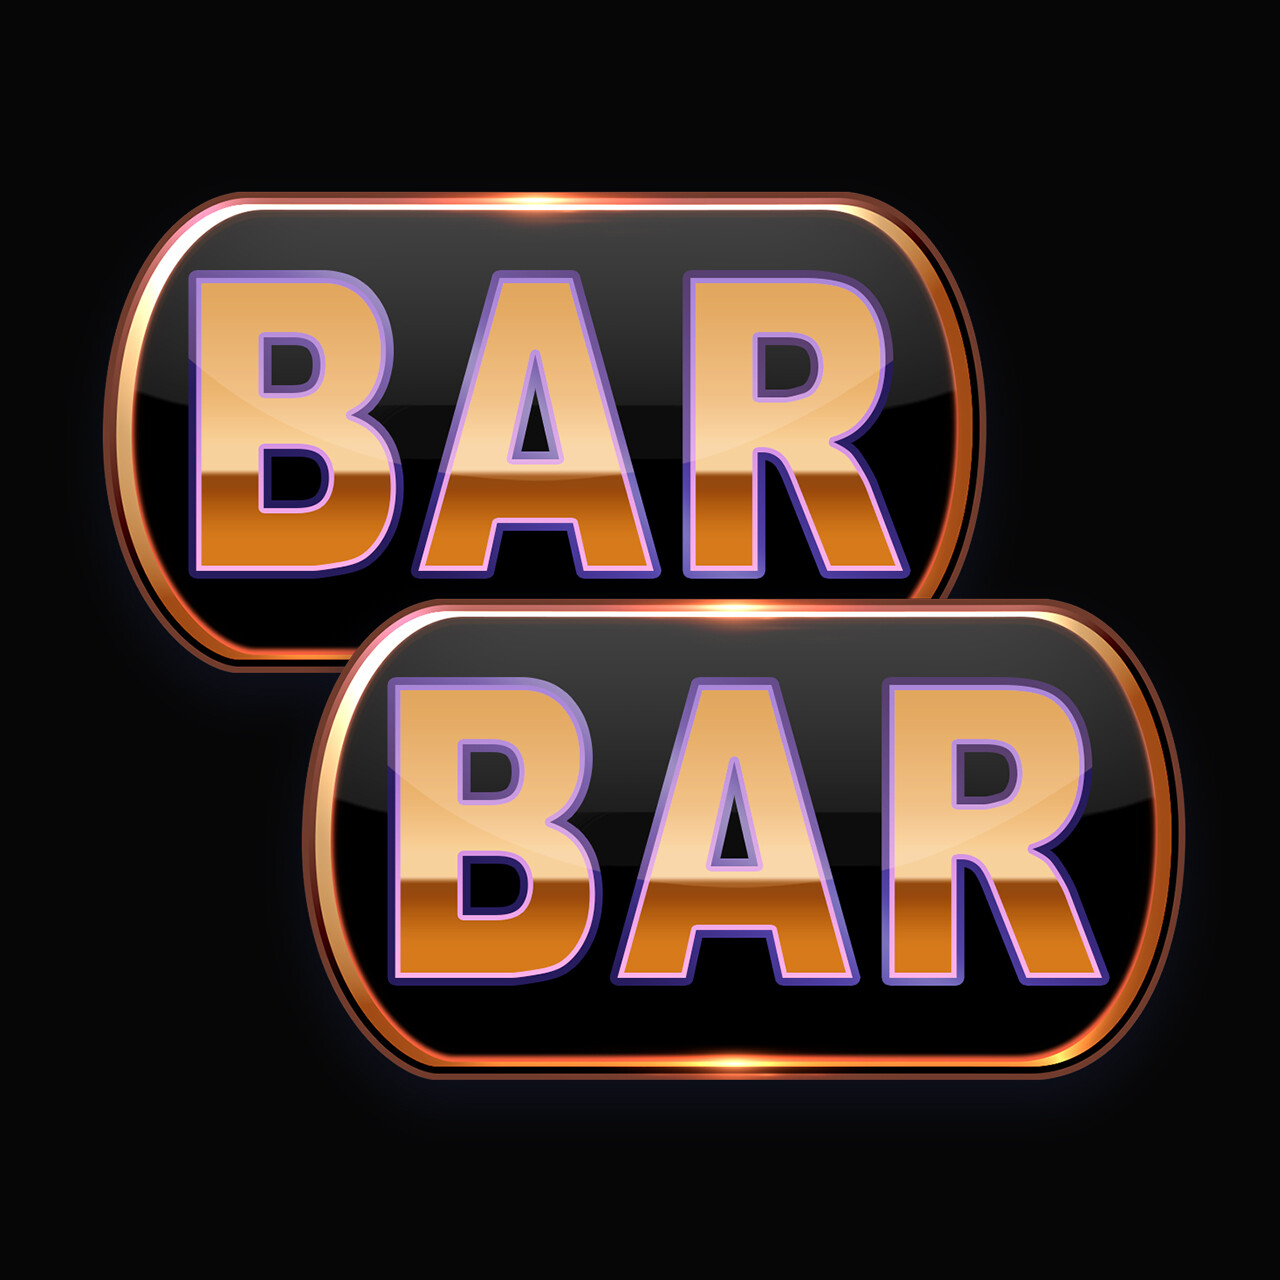 Double Bar symbol